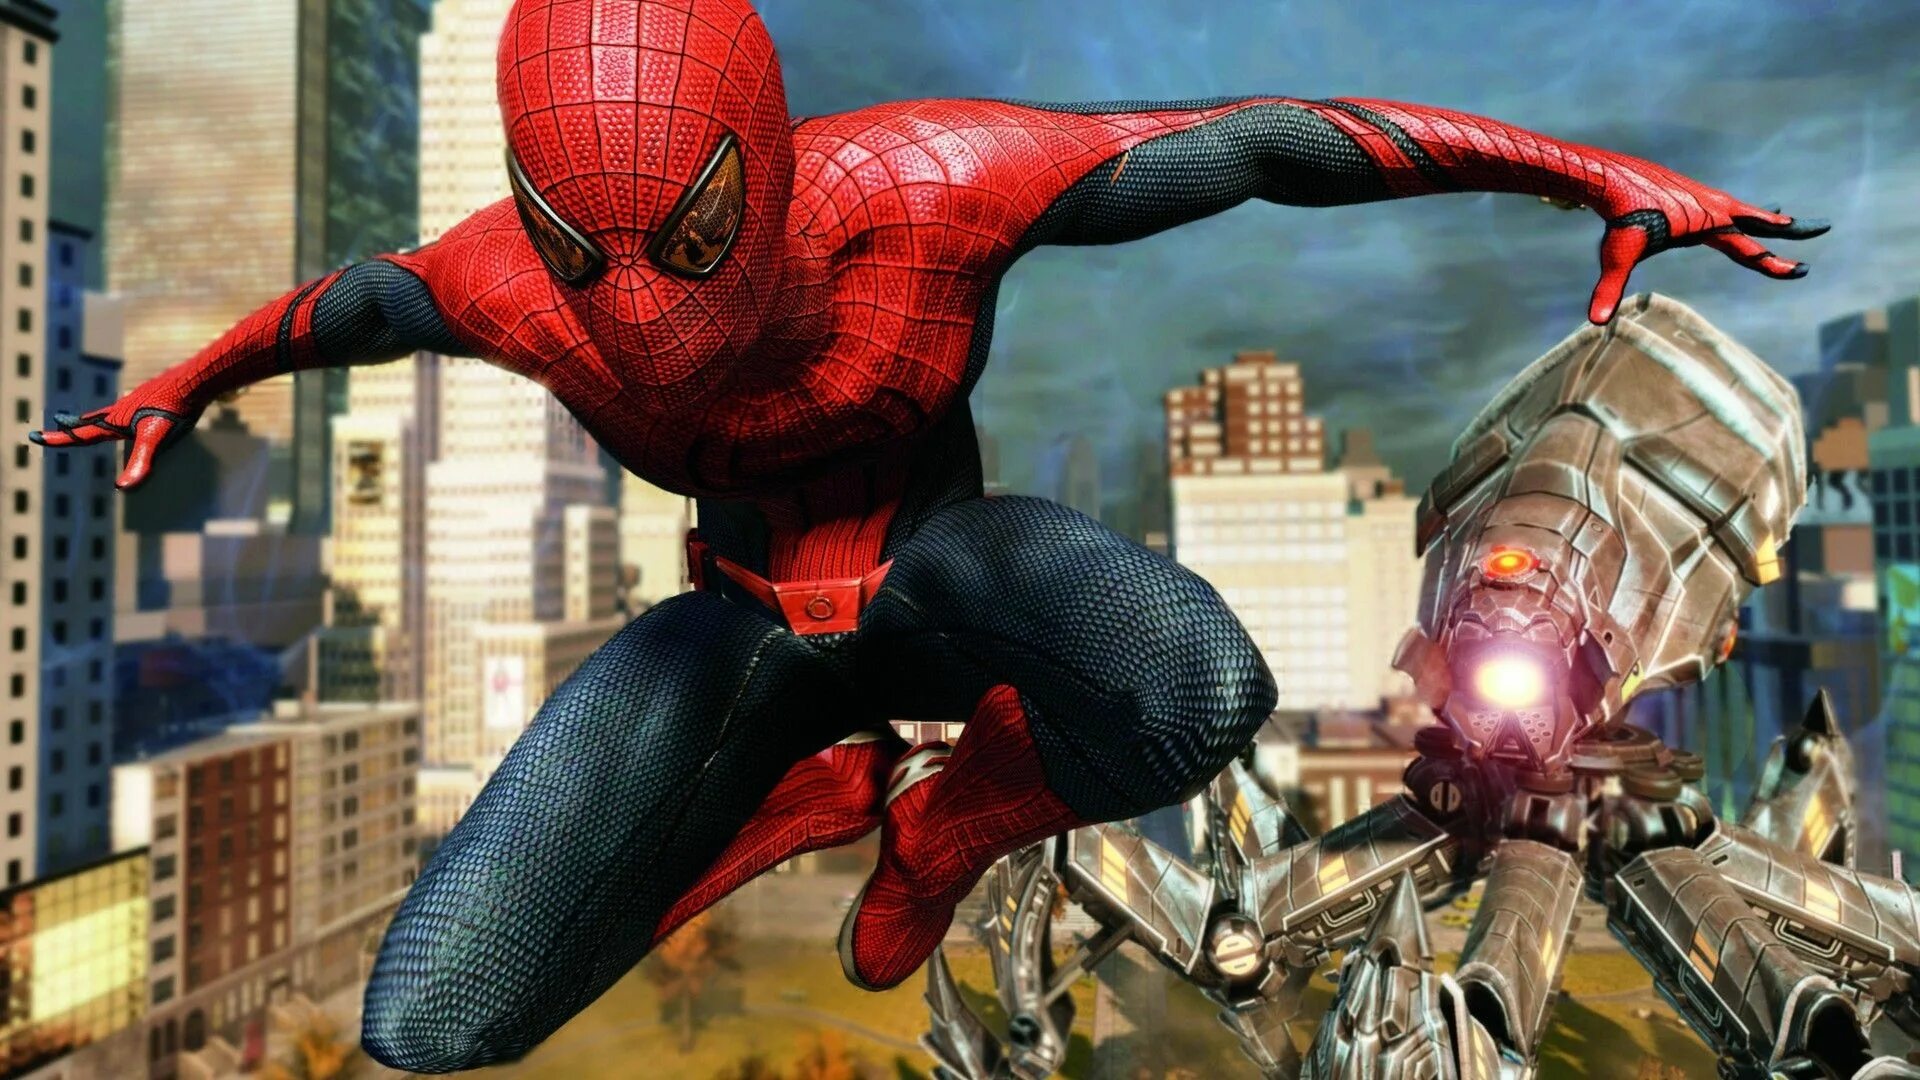 Spider man игра 2012. Эмэйзинг Спайдер Мэн. The amazing Spider-man (игра, 2012). Амазинг Спайдер Мэн игра. Эмейзинг человек паук 1.